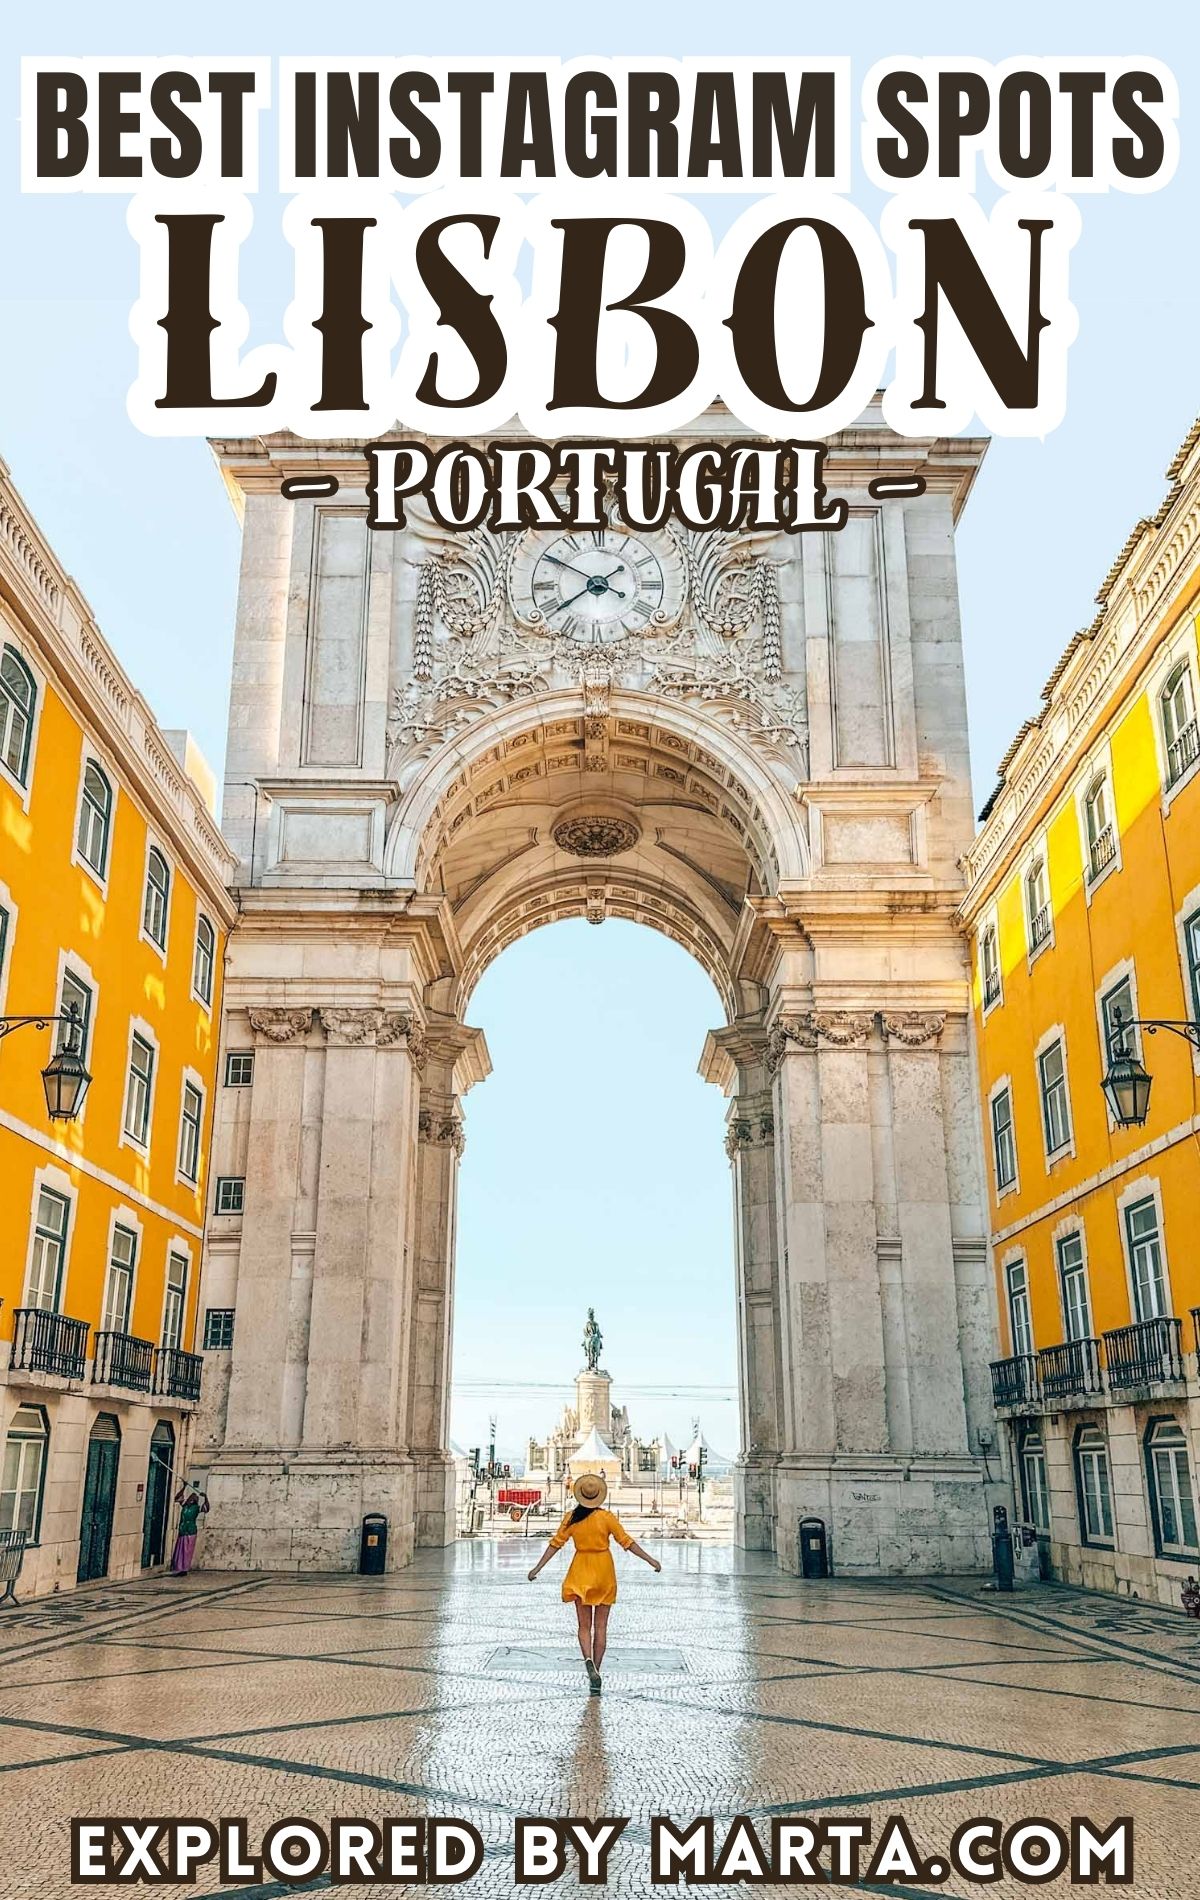 Best Instagram spots in Lisbon - Instagrammable photo spots you should visit when traveling to Lisbon, Portugal